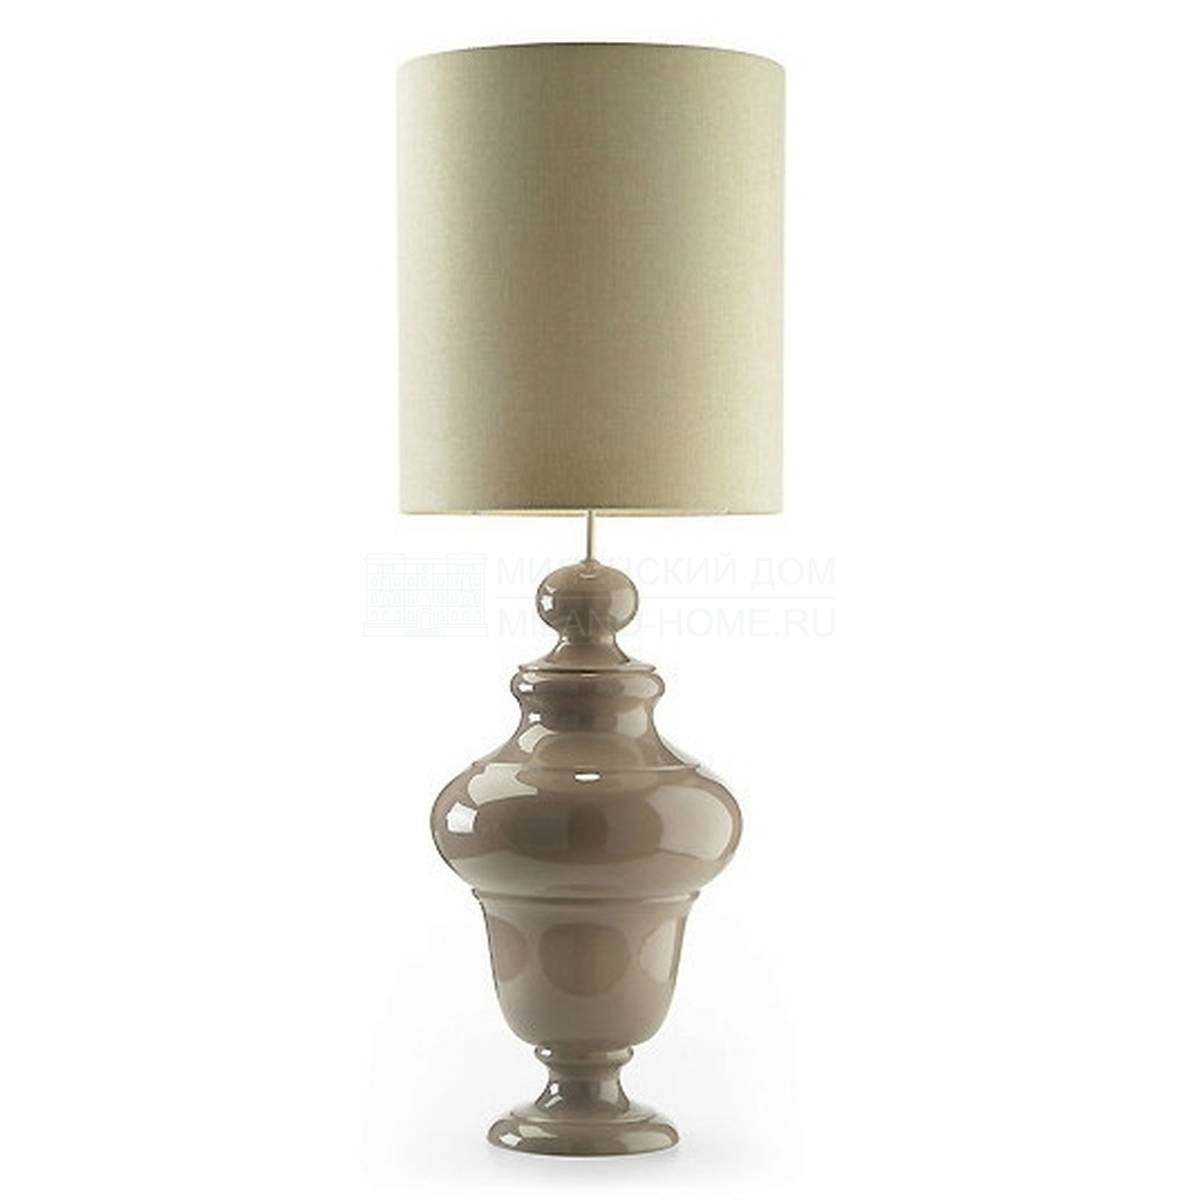 Настольная лампа Tuscany A table lamp из Италии фабрики MARIONI